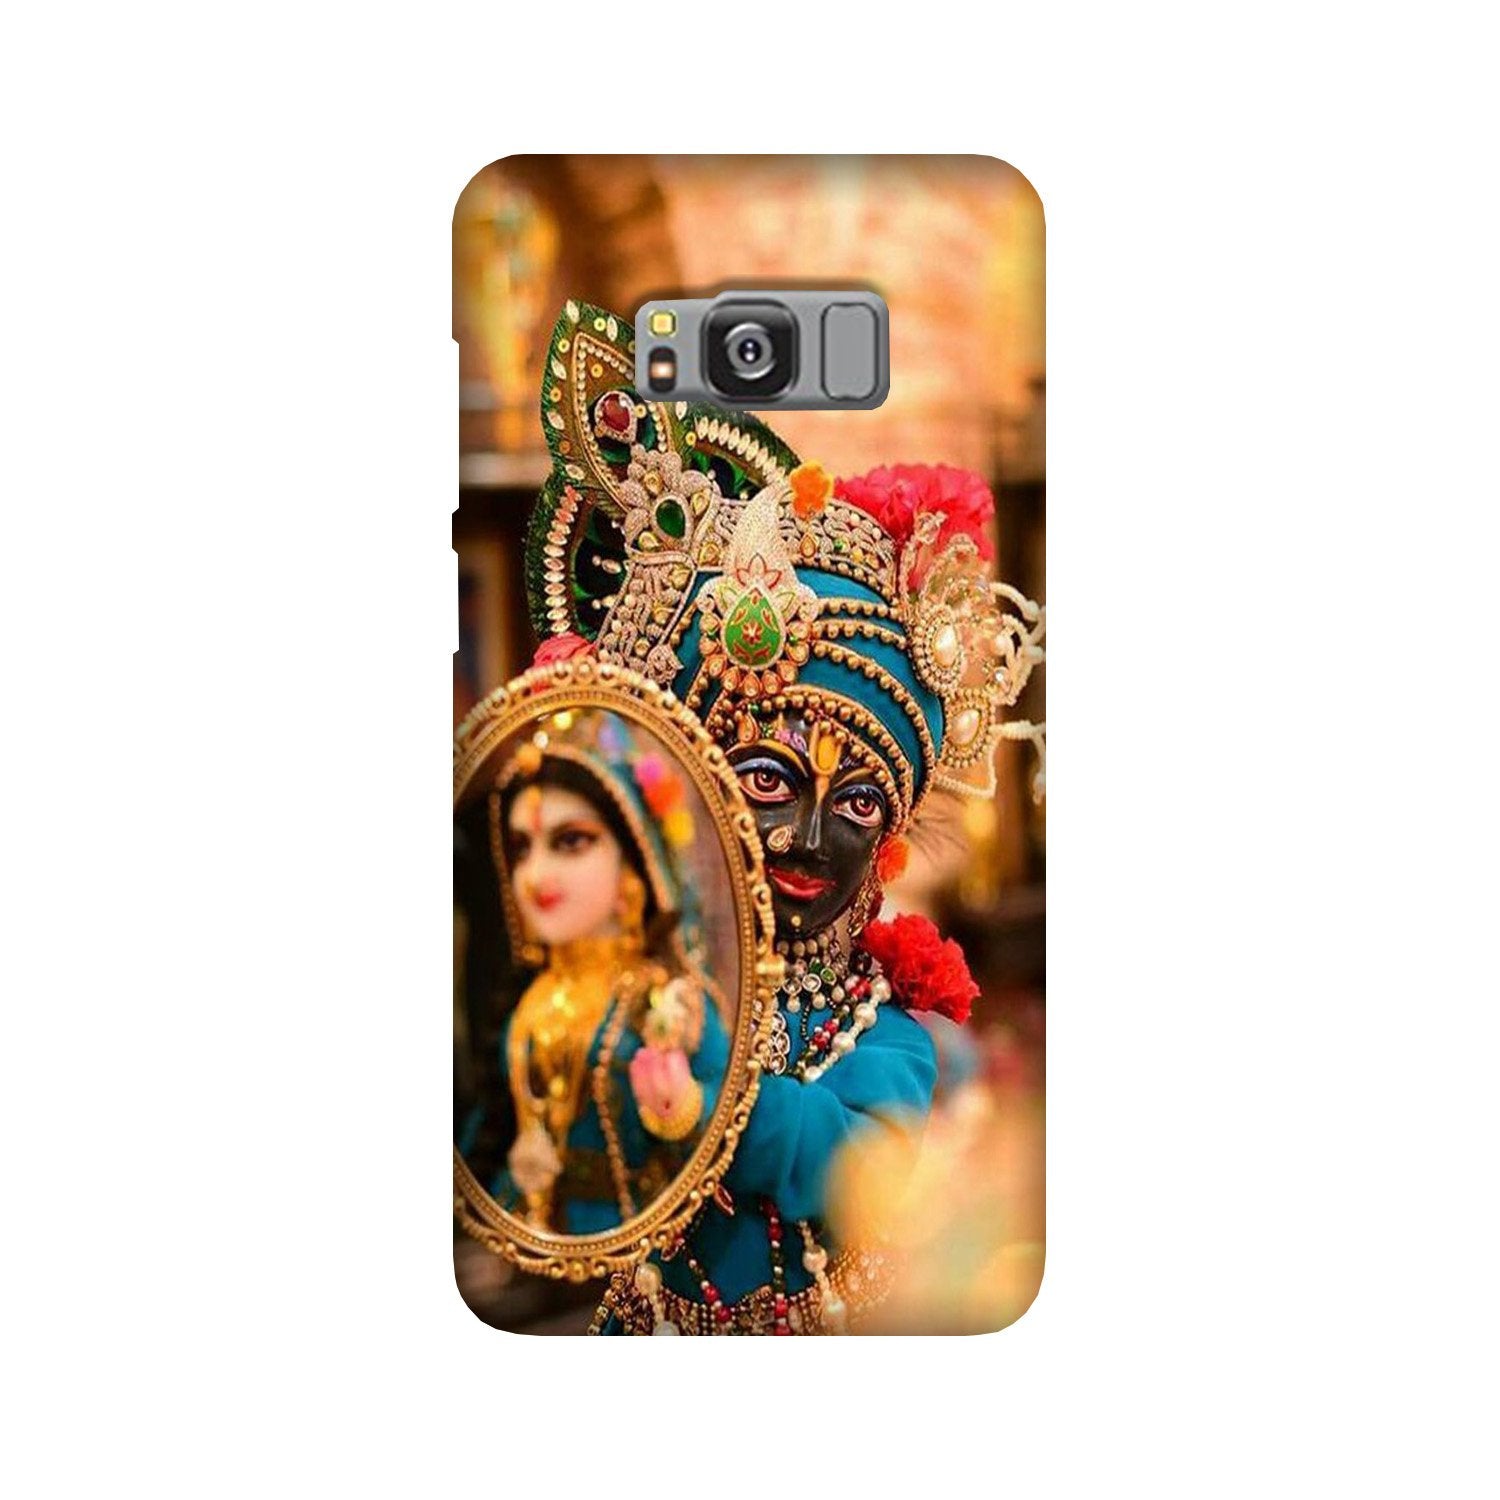 Lord Krishna5 Case for Galaxy S8 Plus